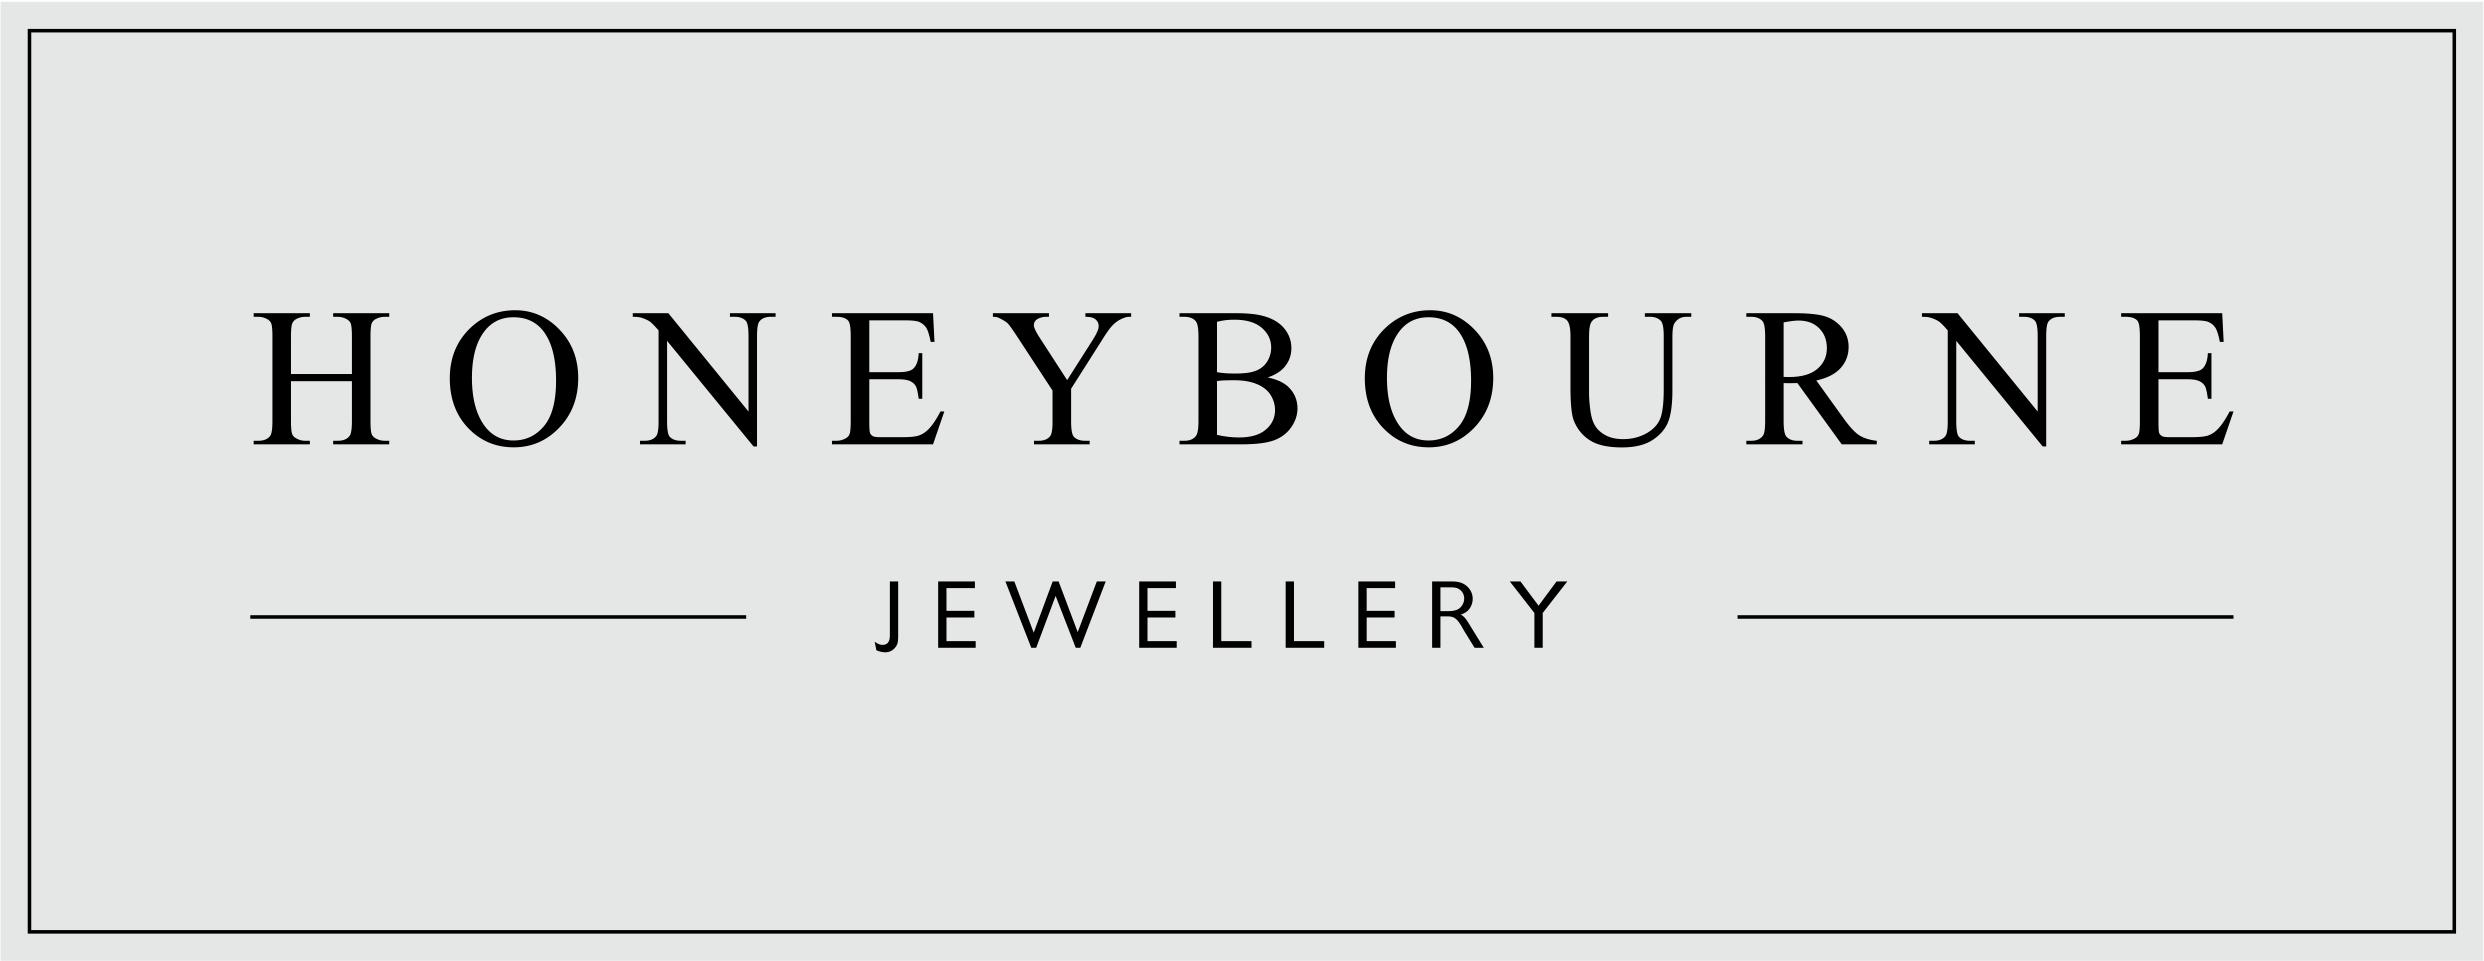 Honeybourne Jewellery Ltd